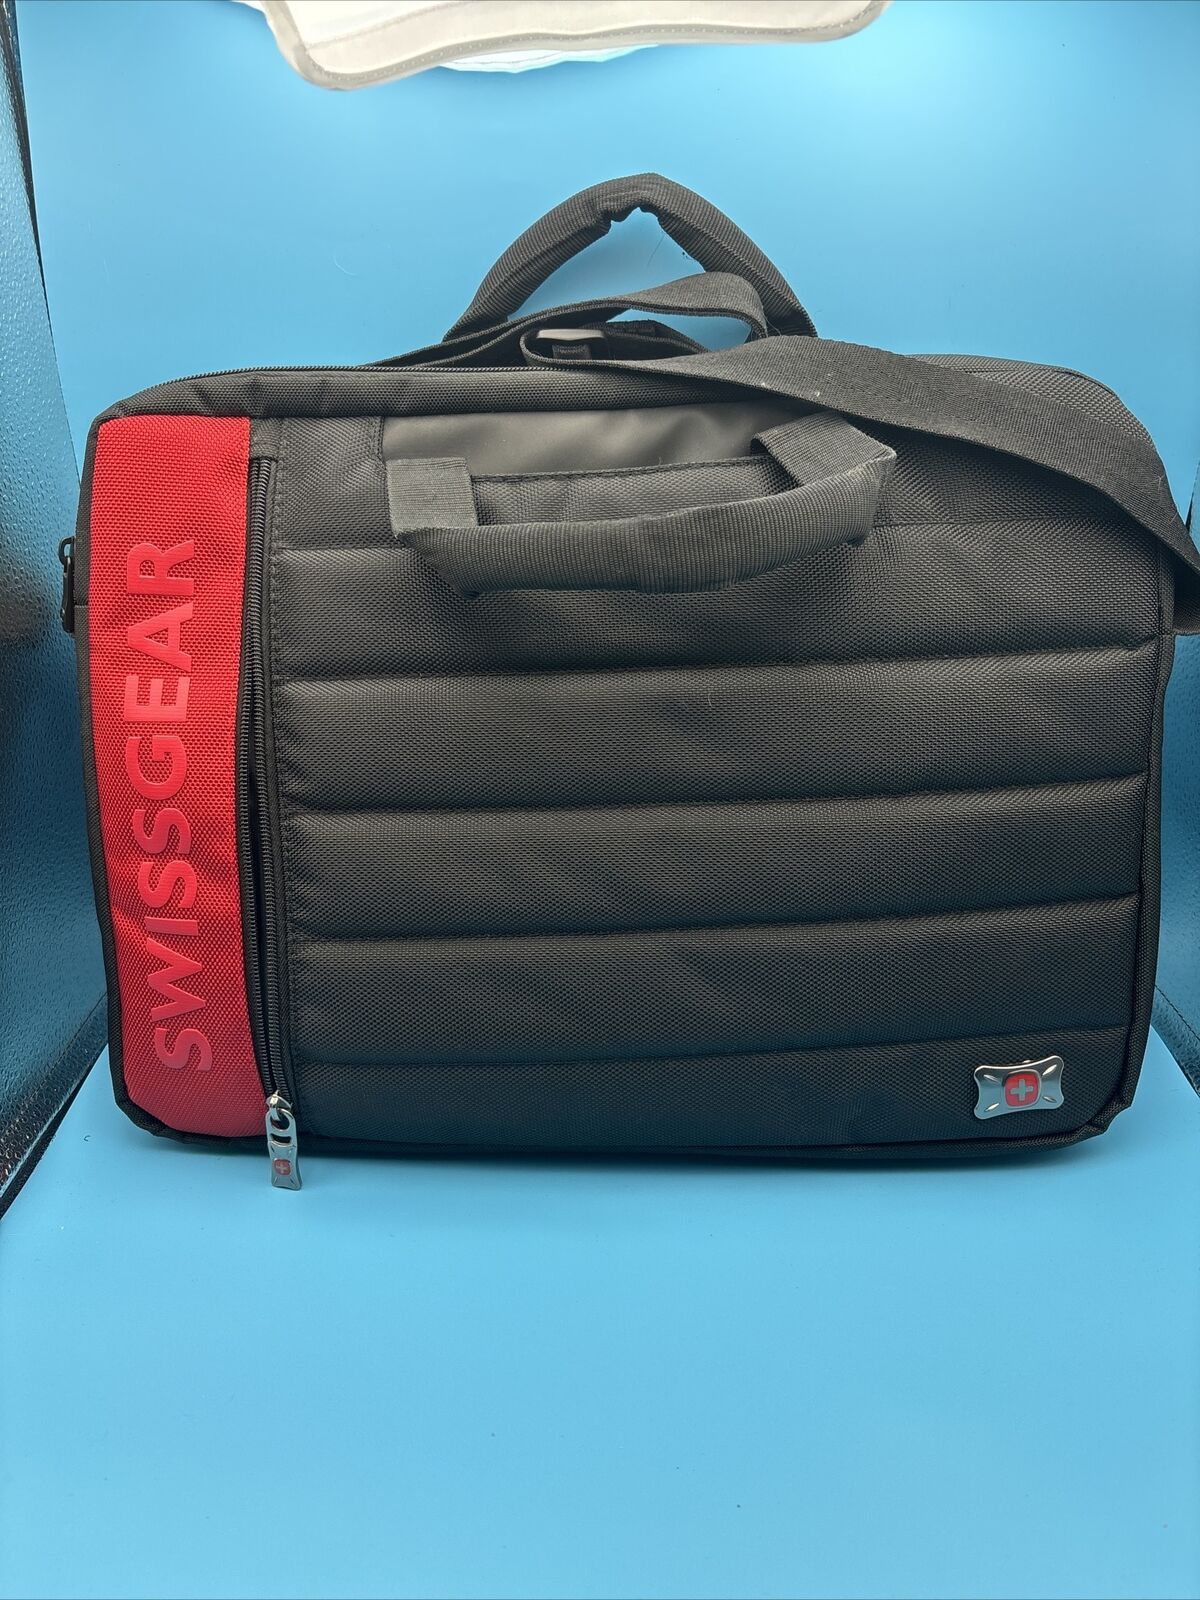 Swiss Gear Wenger The Anthem  Black Padded Laptop Travel Messenger Bag